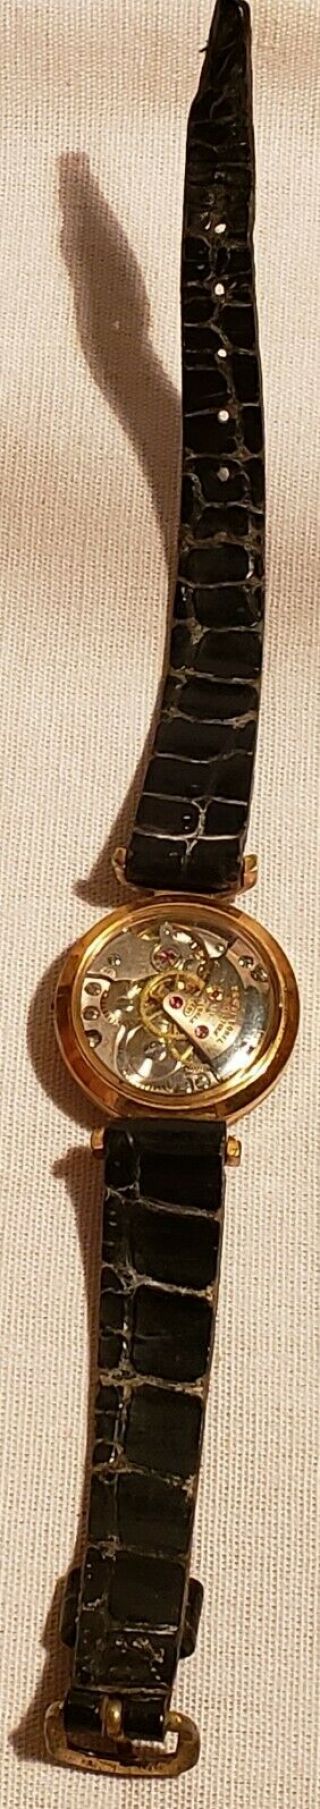 Women ' s Ernest Borel Cocktail Watch.  Swiss Made 17j Parts/ Repair kaleidoscope 5